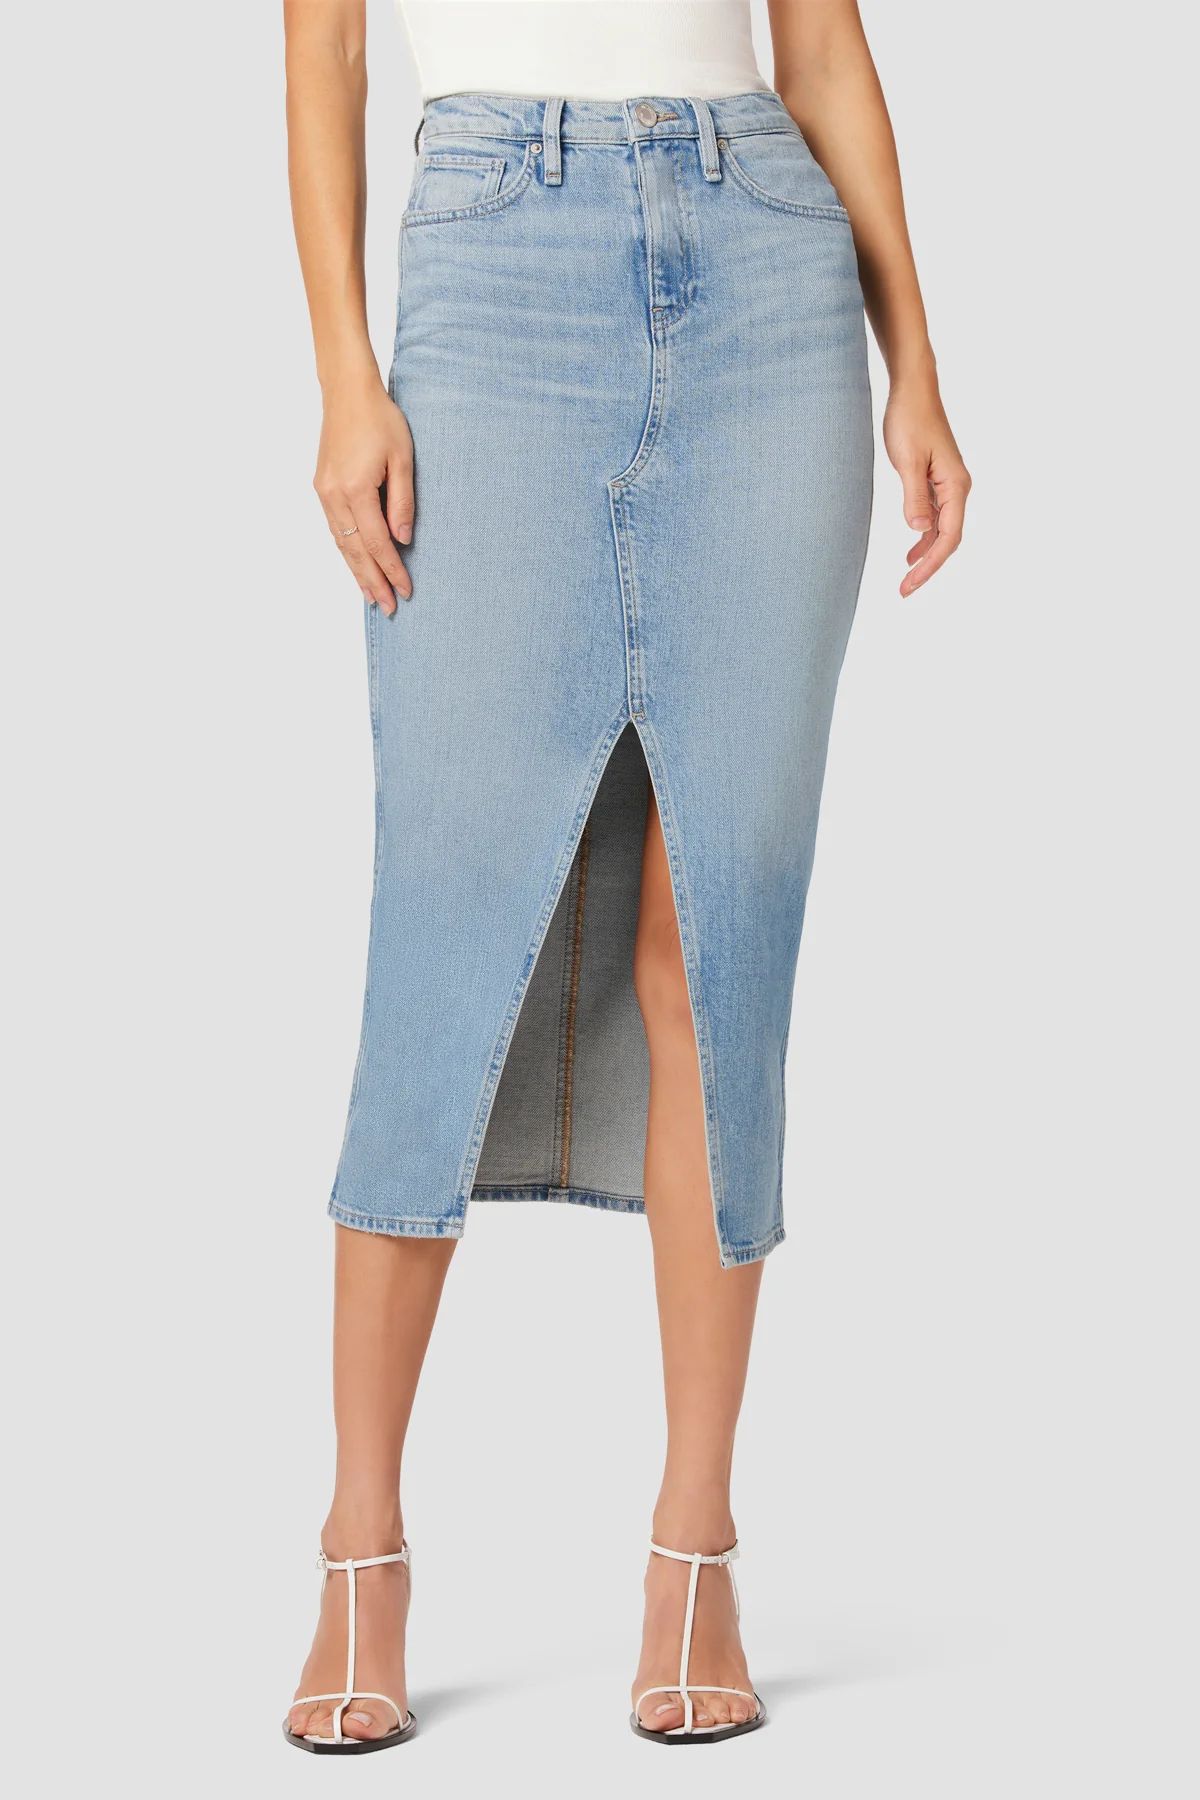 Reconstructed Skirt | Hudson Jeans